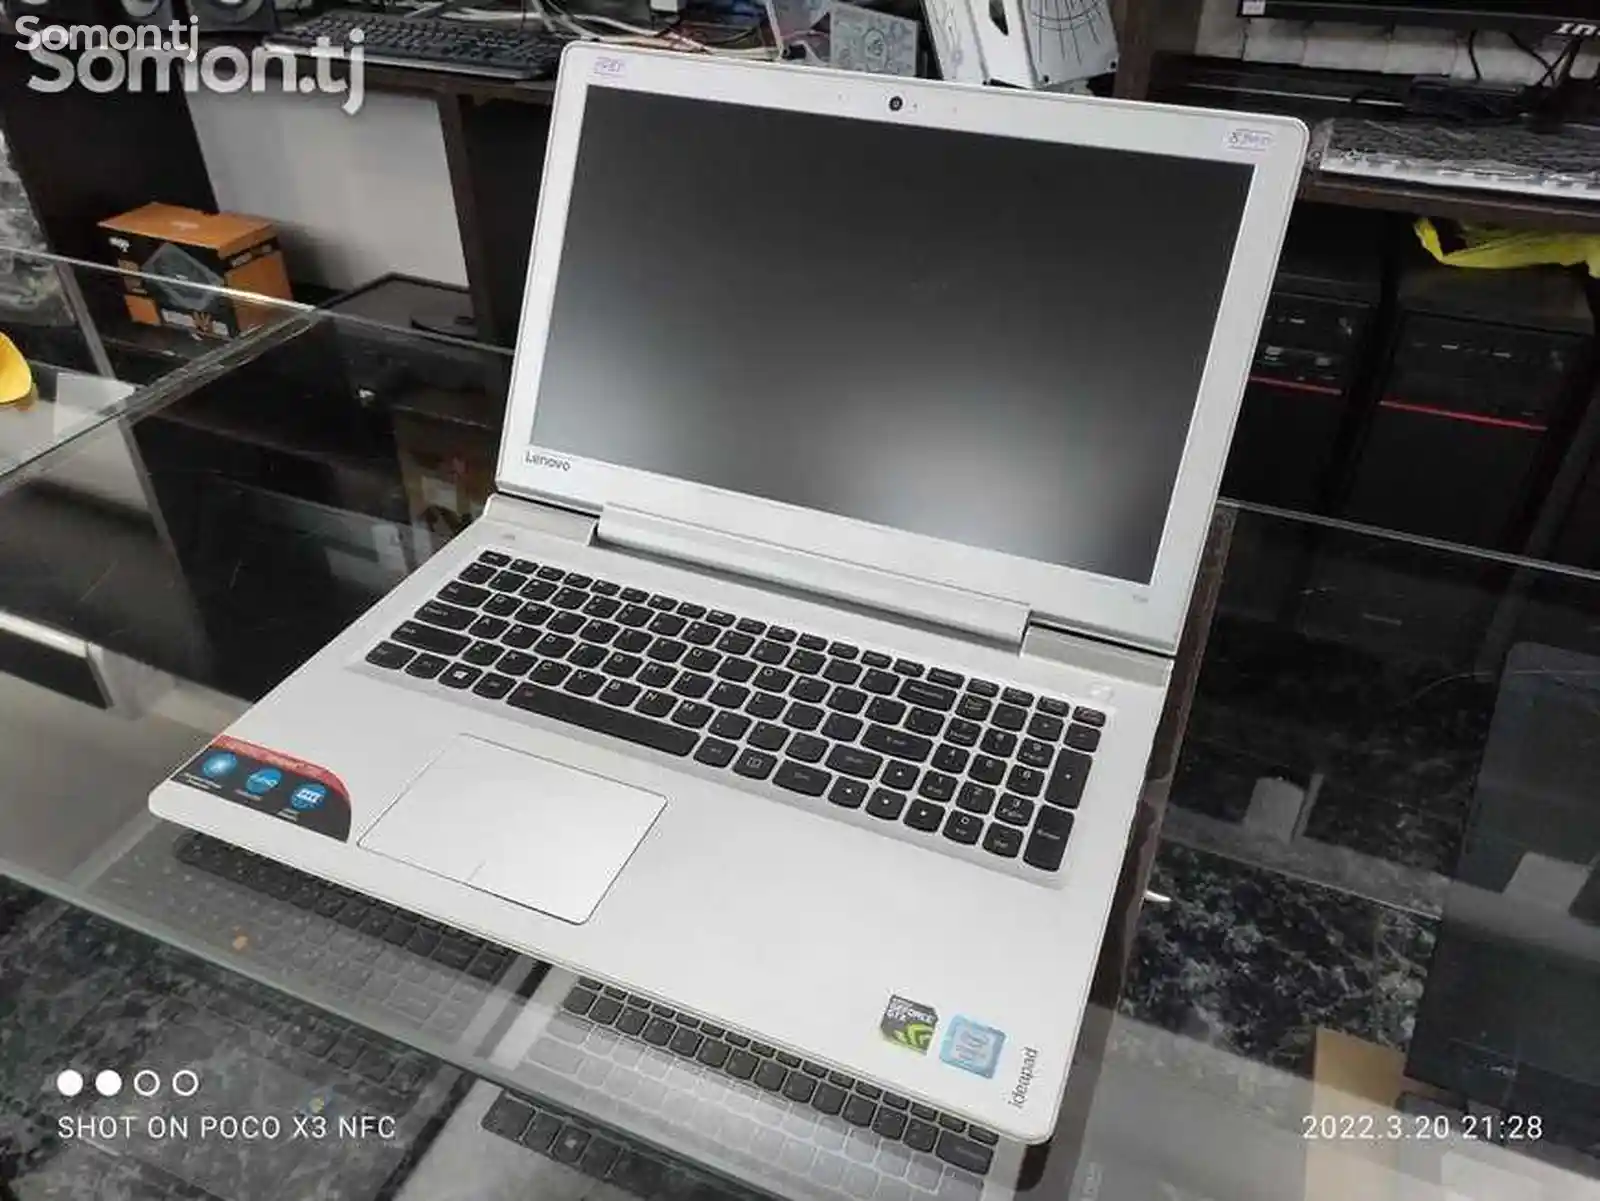 Игровой Ноутбук Lenovo Ideapad 700 Core i7-6700HQ GTX 950M 2Gb-3